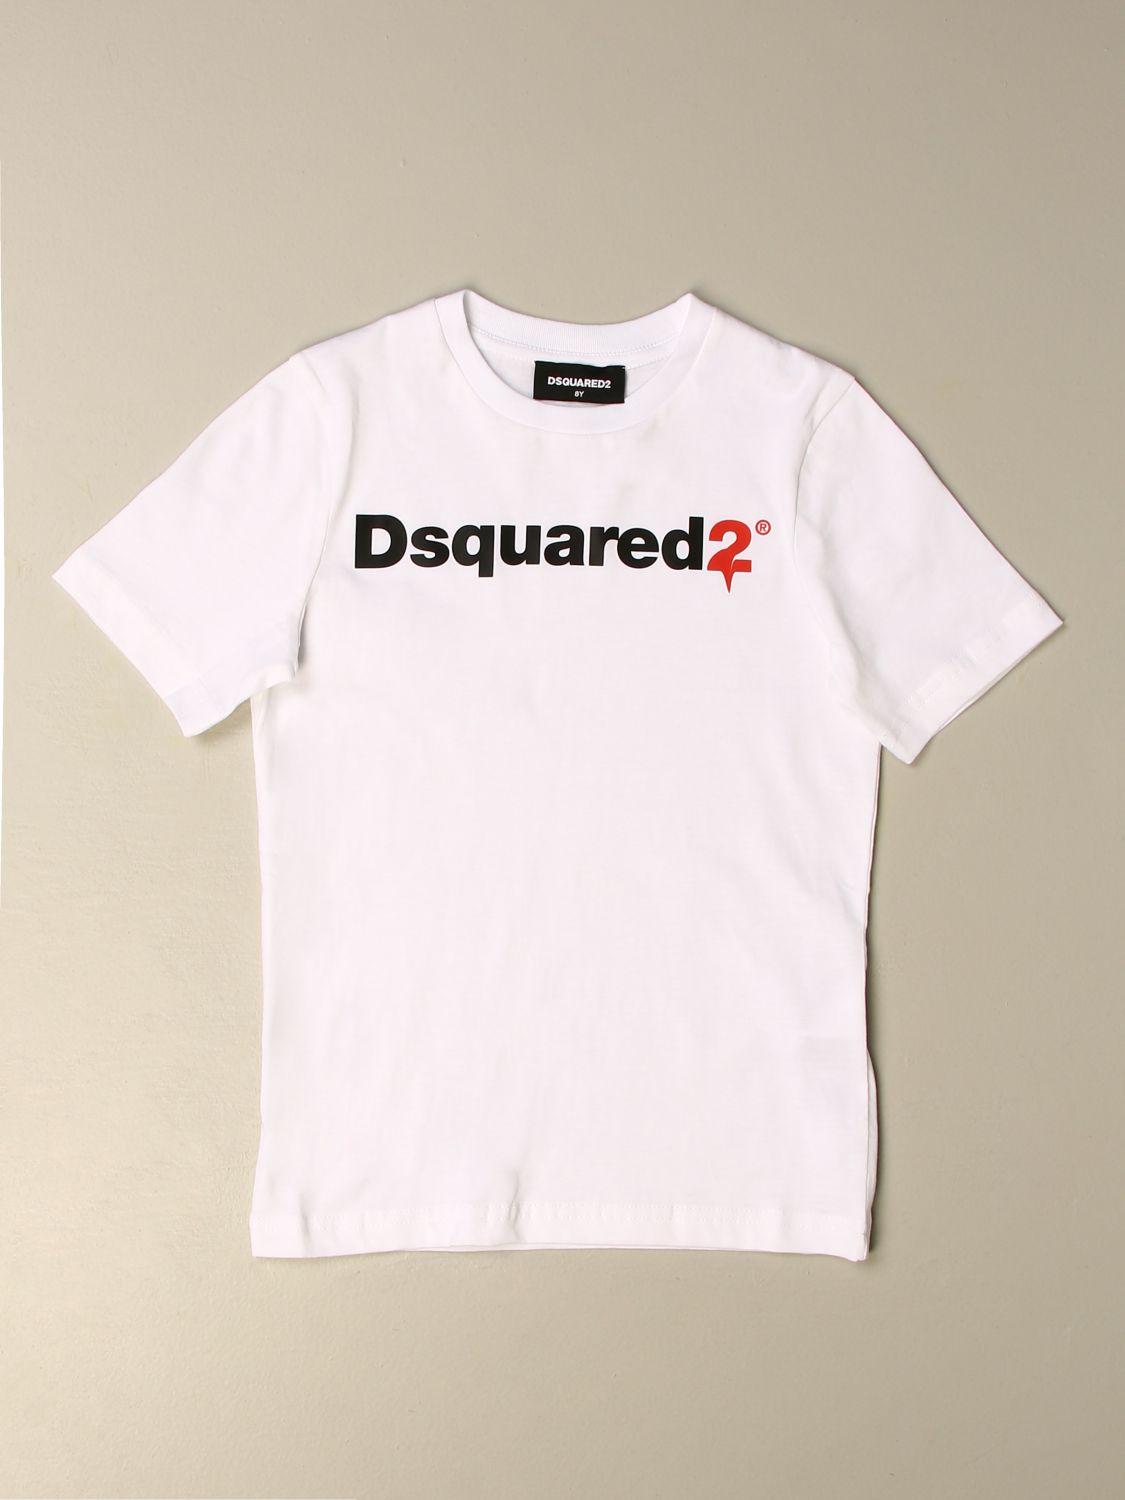 dsquared2 shirt kids